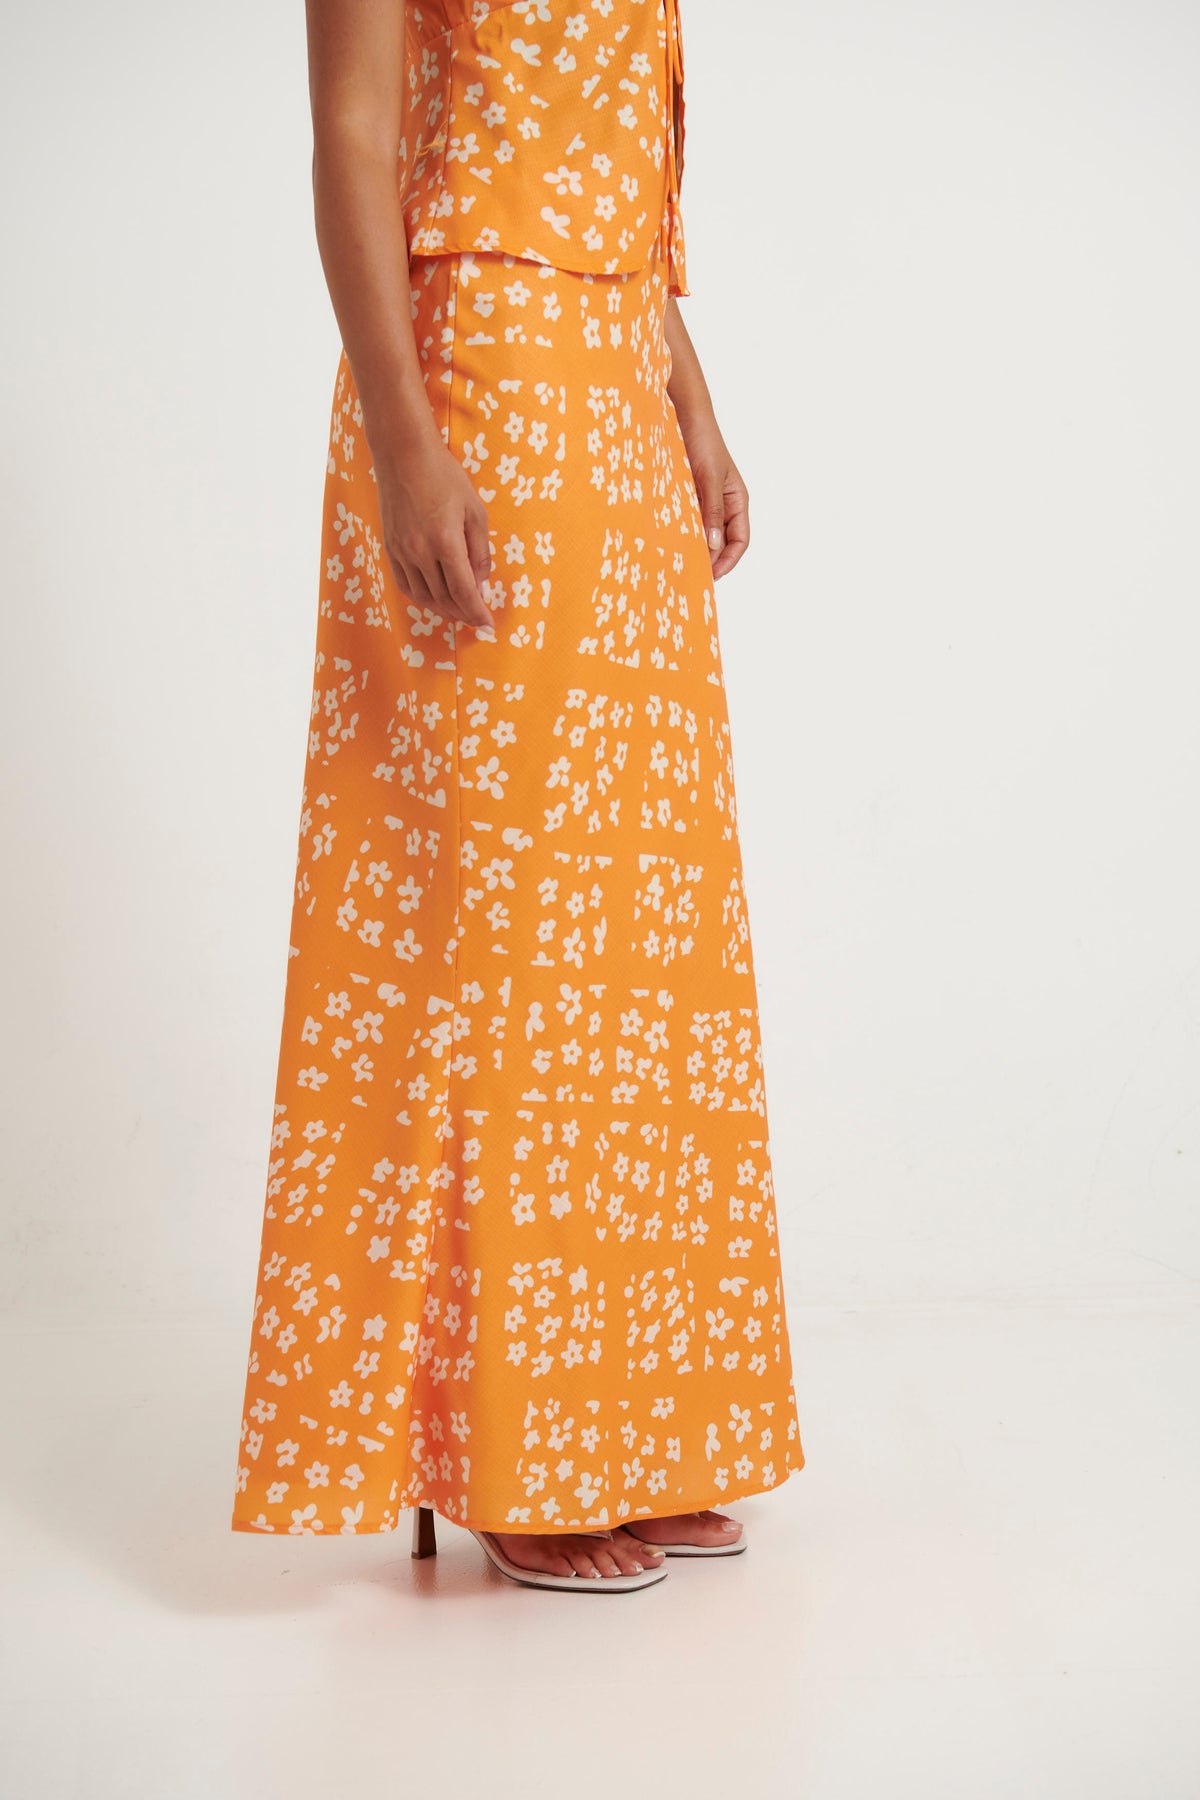 Ryleigh Maxi Skirt Tangerine